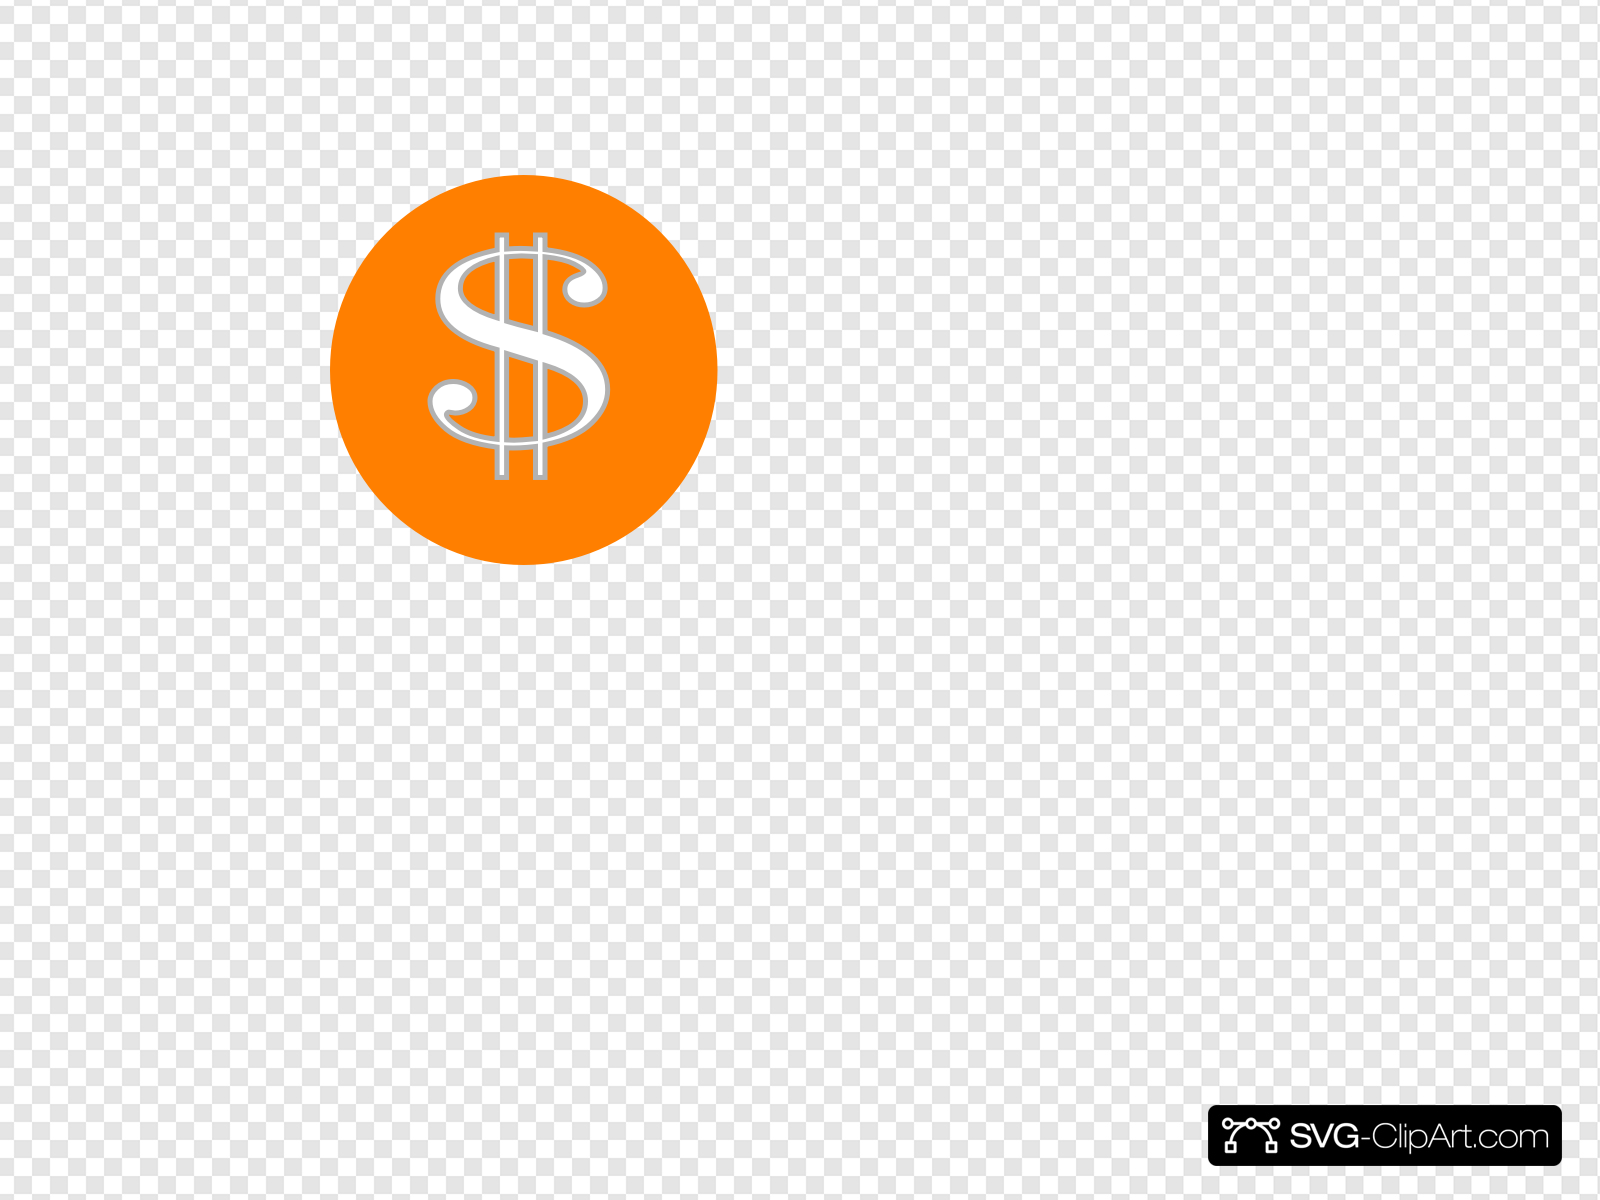 Orange Dollar Sign Clip art, Icon and SVG